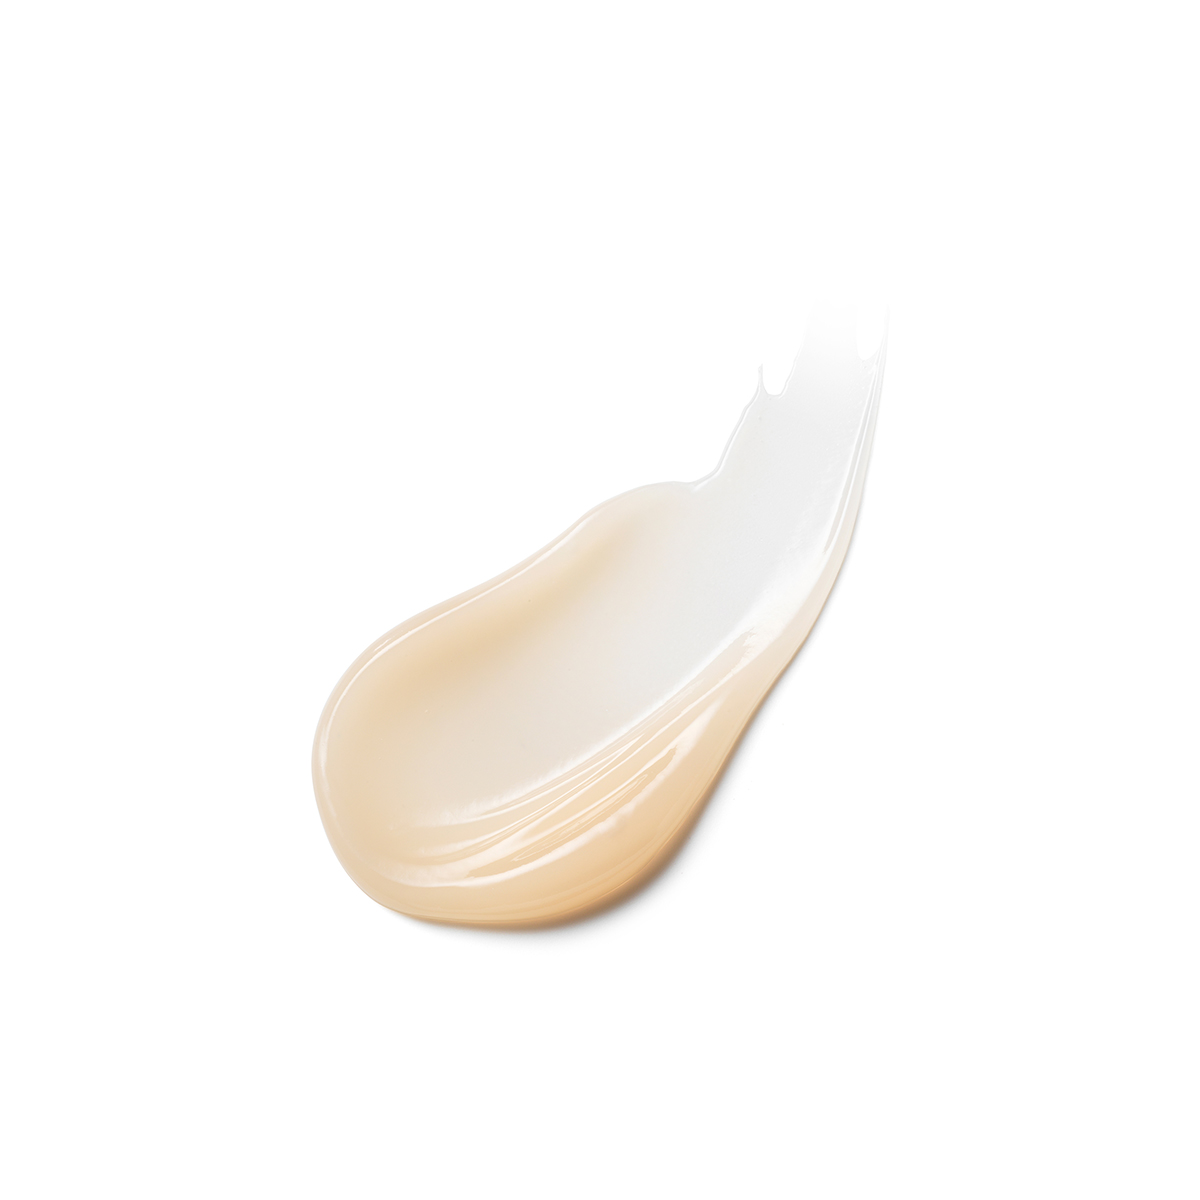 Estee Lauder(tm) Advanced Night Repair Eye Supercharged Gel-Cream